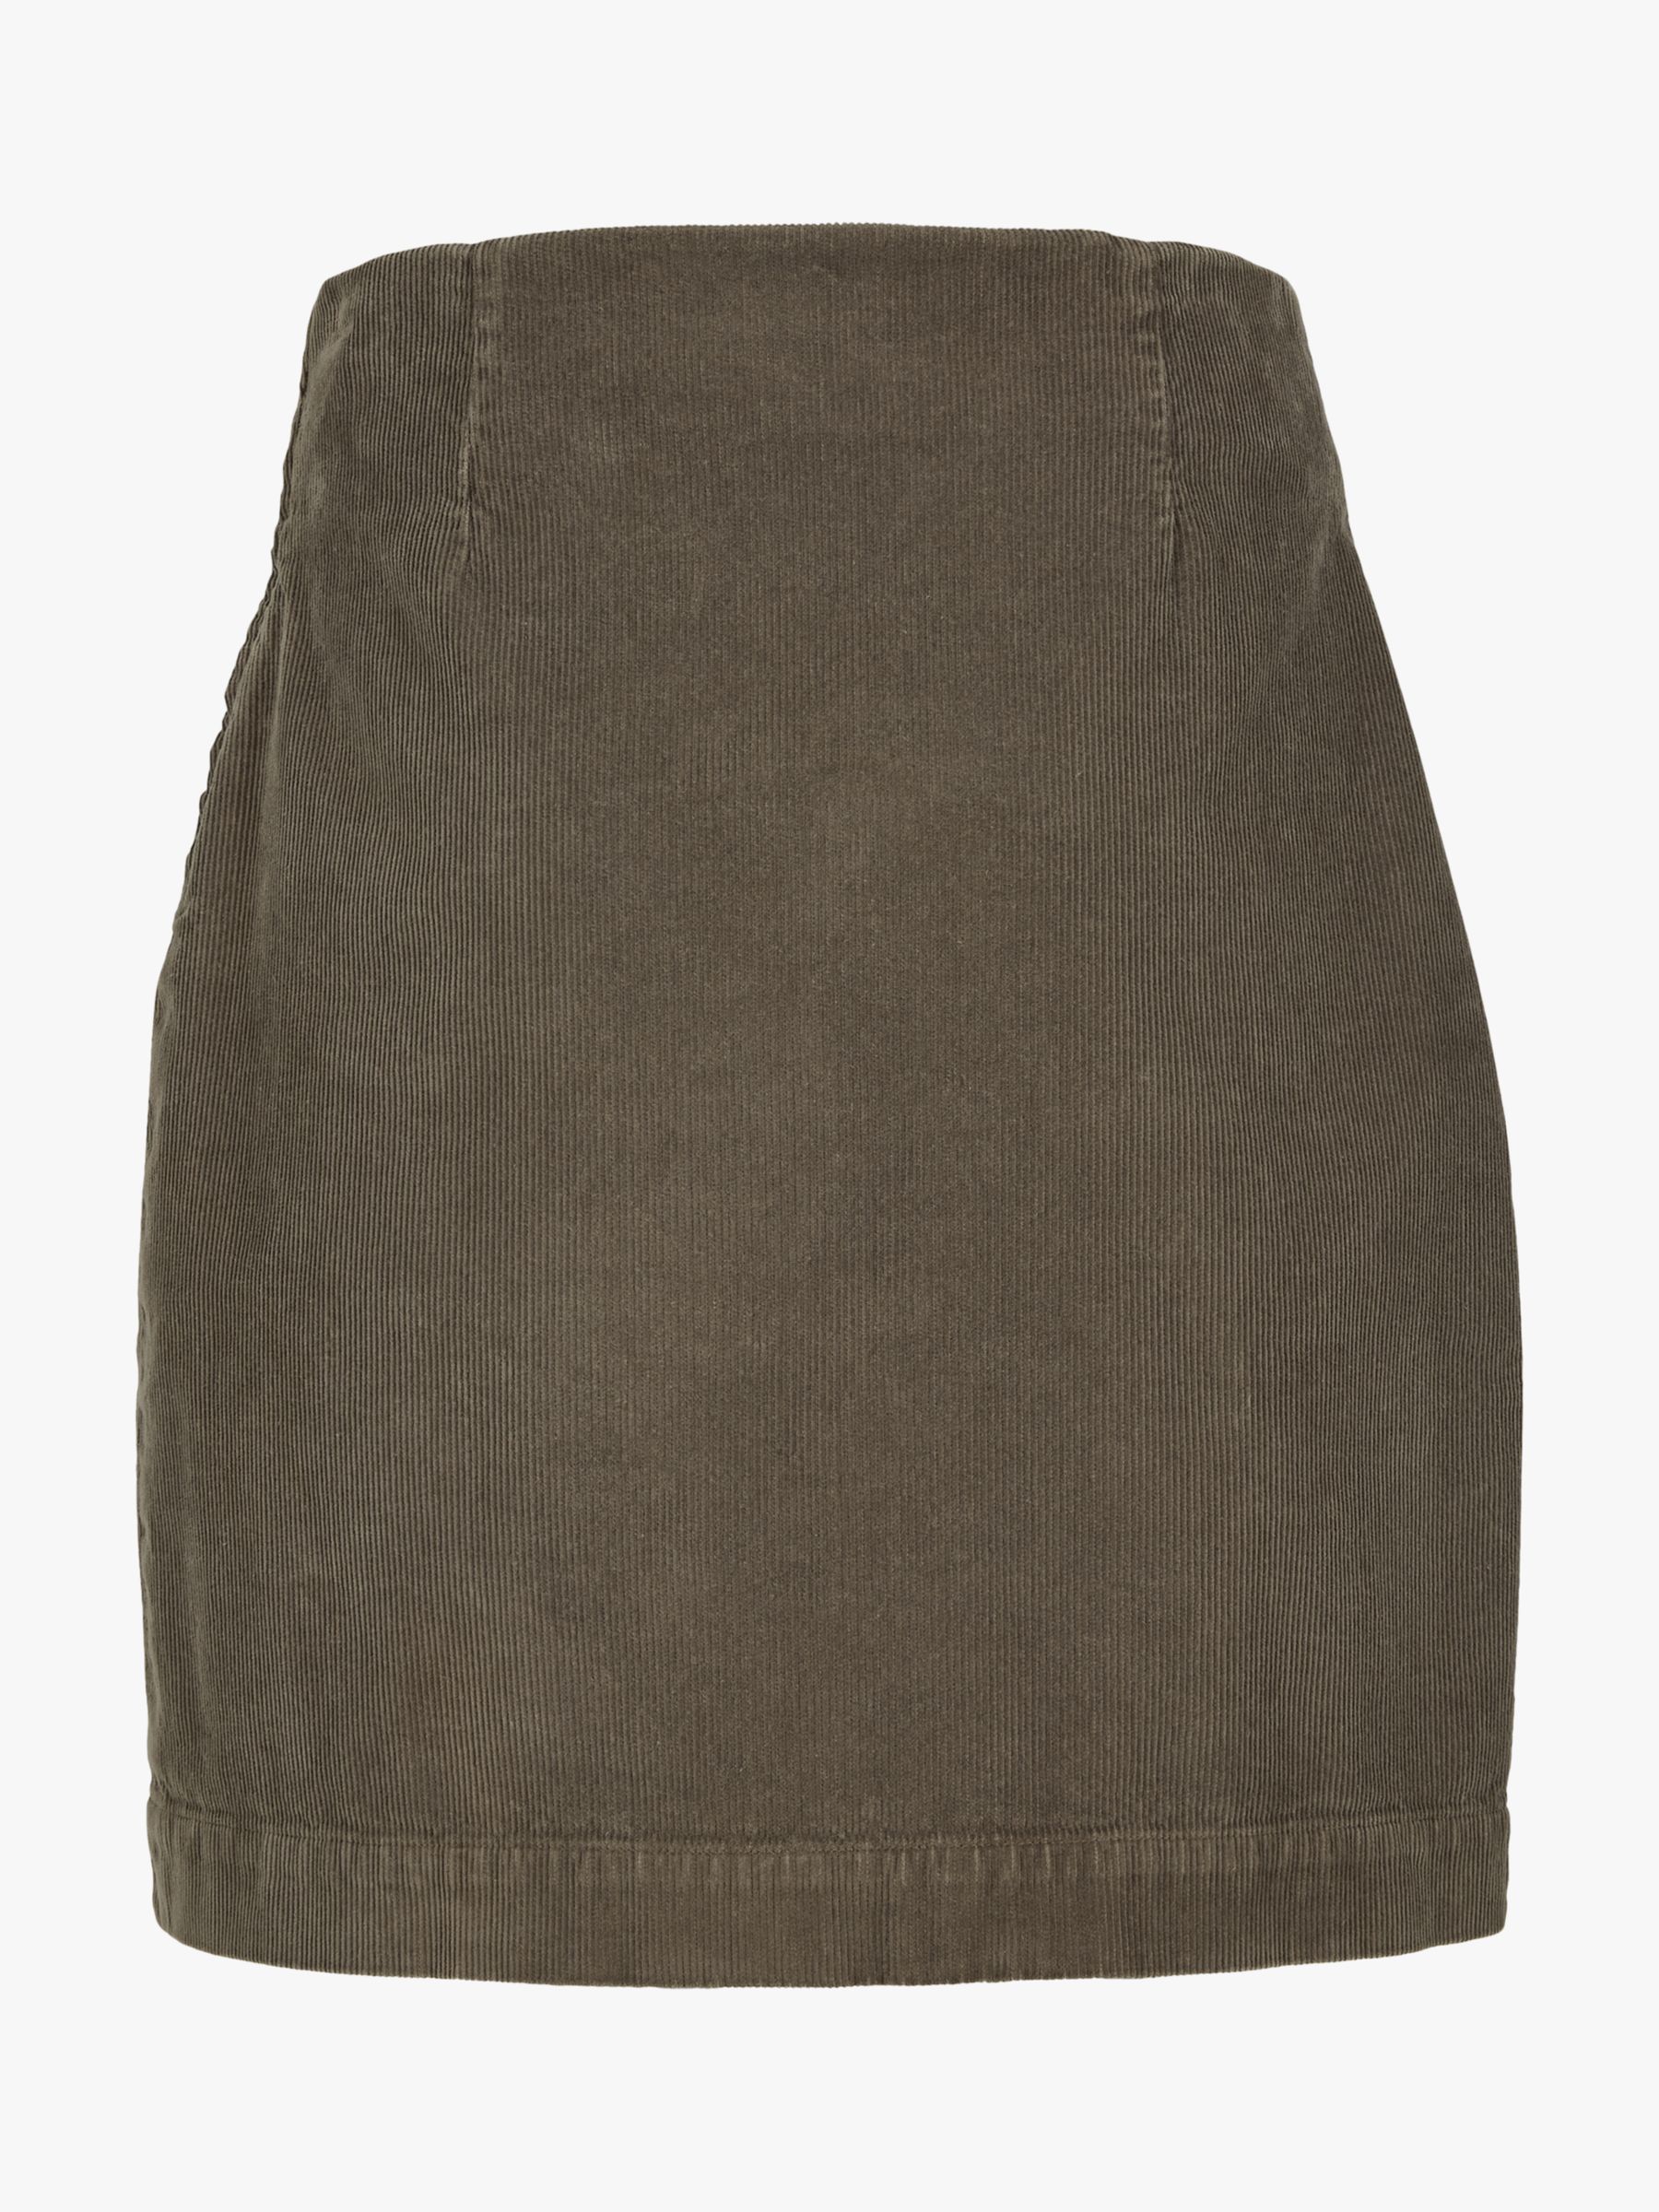 Buy Celtic & Co. Cotton Corduroy Knee Length Skirt, Mushroom Online at johnlewis.com